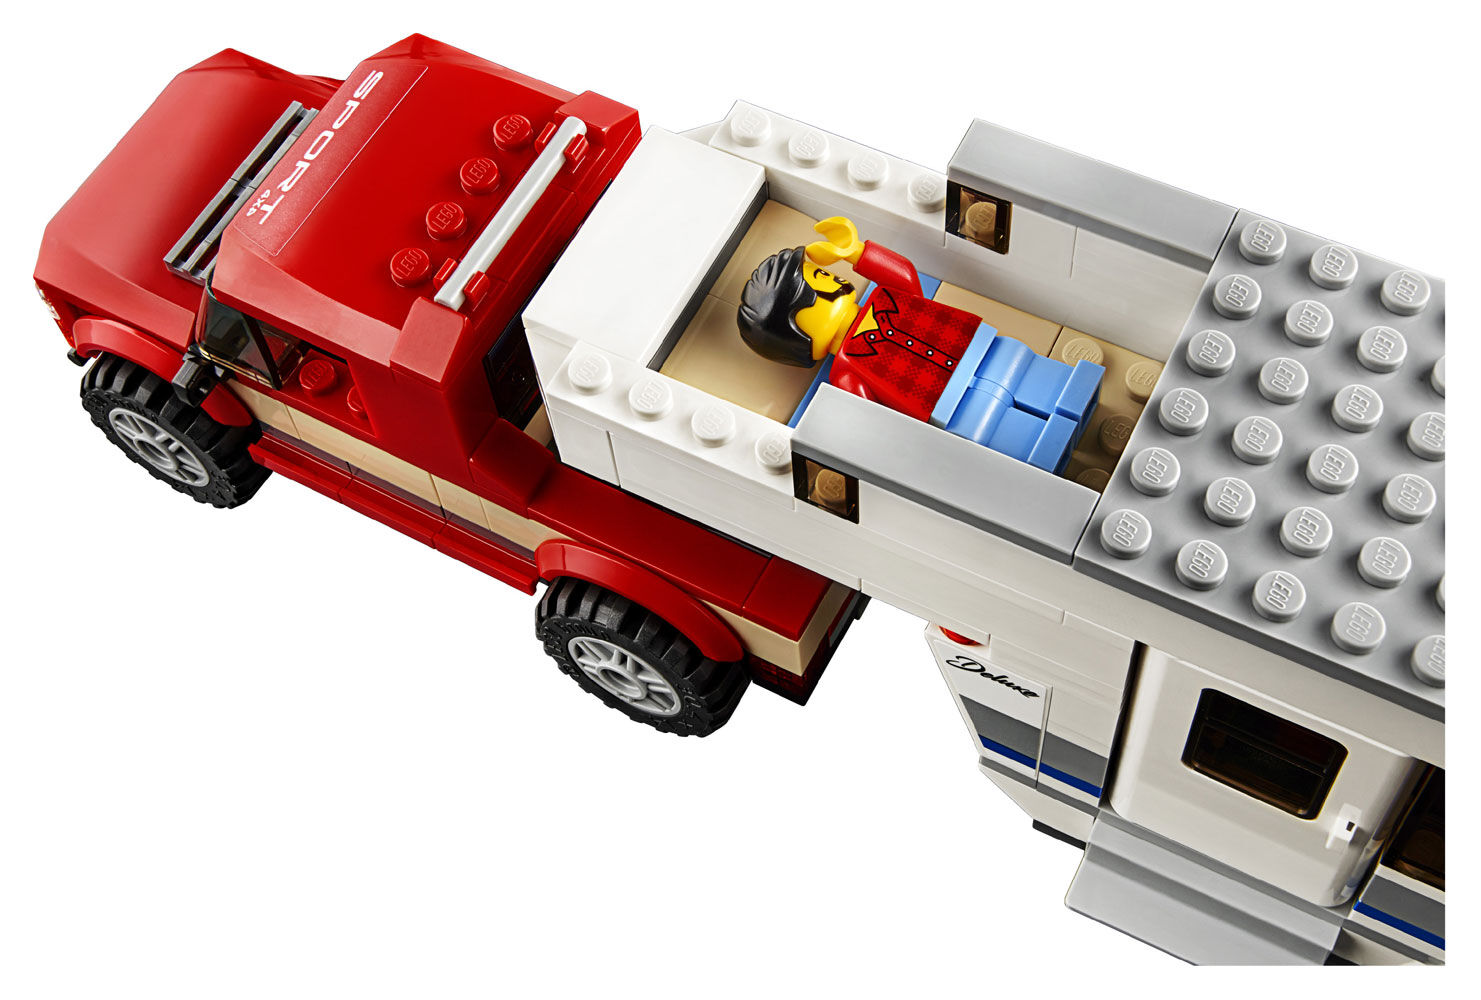 lego truck and caravan